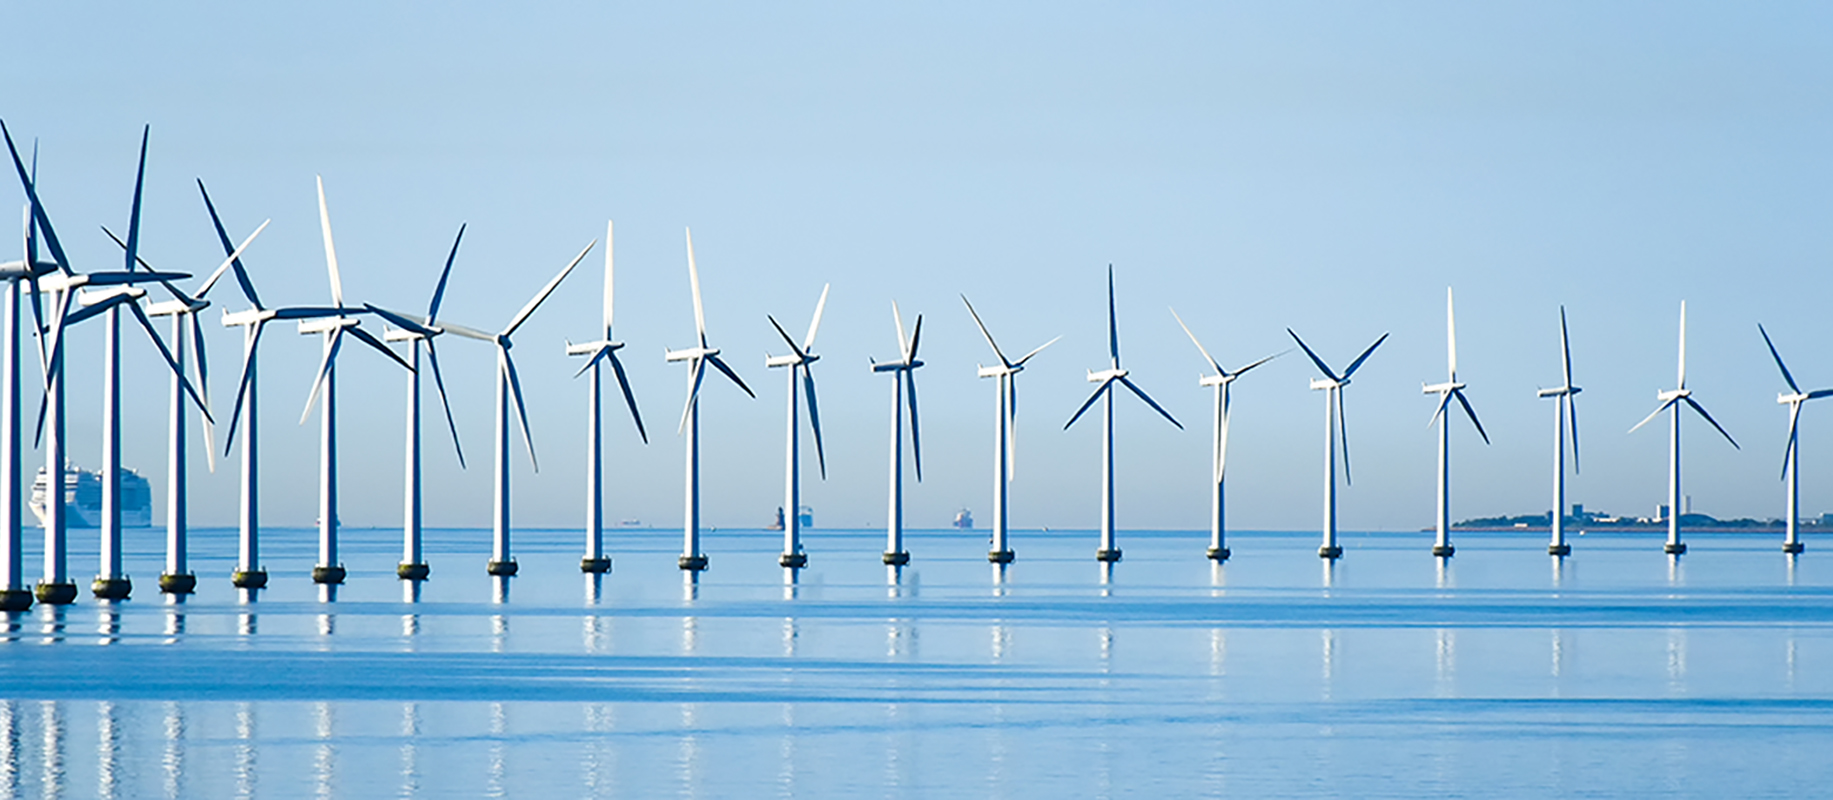 Offshore wind turbines on the coast of Copenhagen in Denmark. Image: Shutterstock